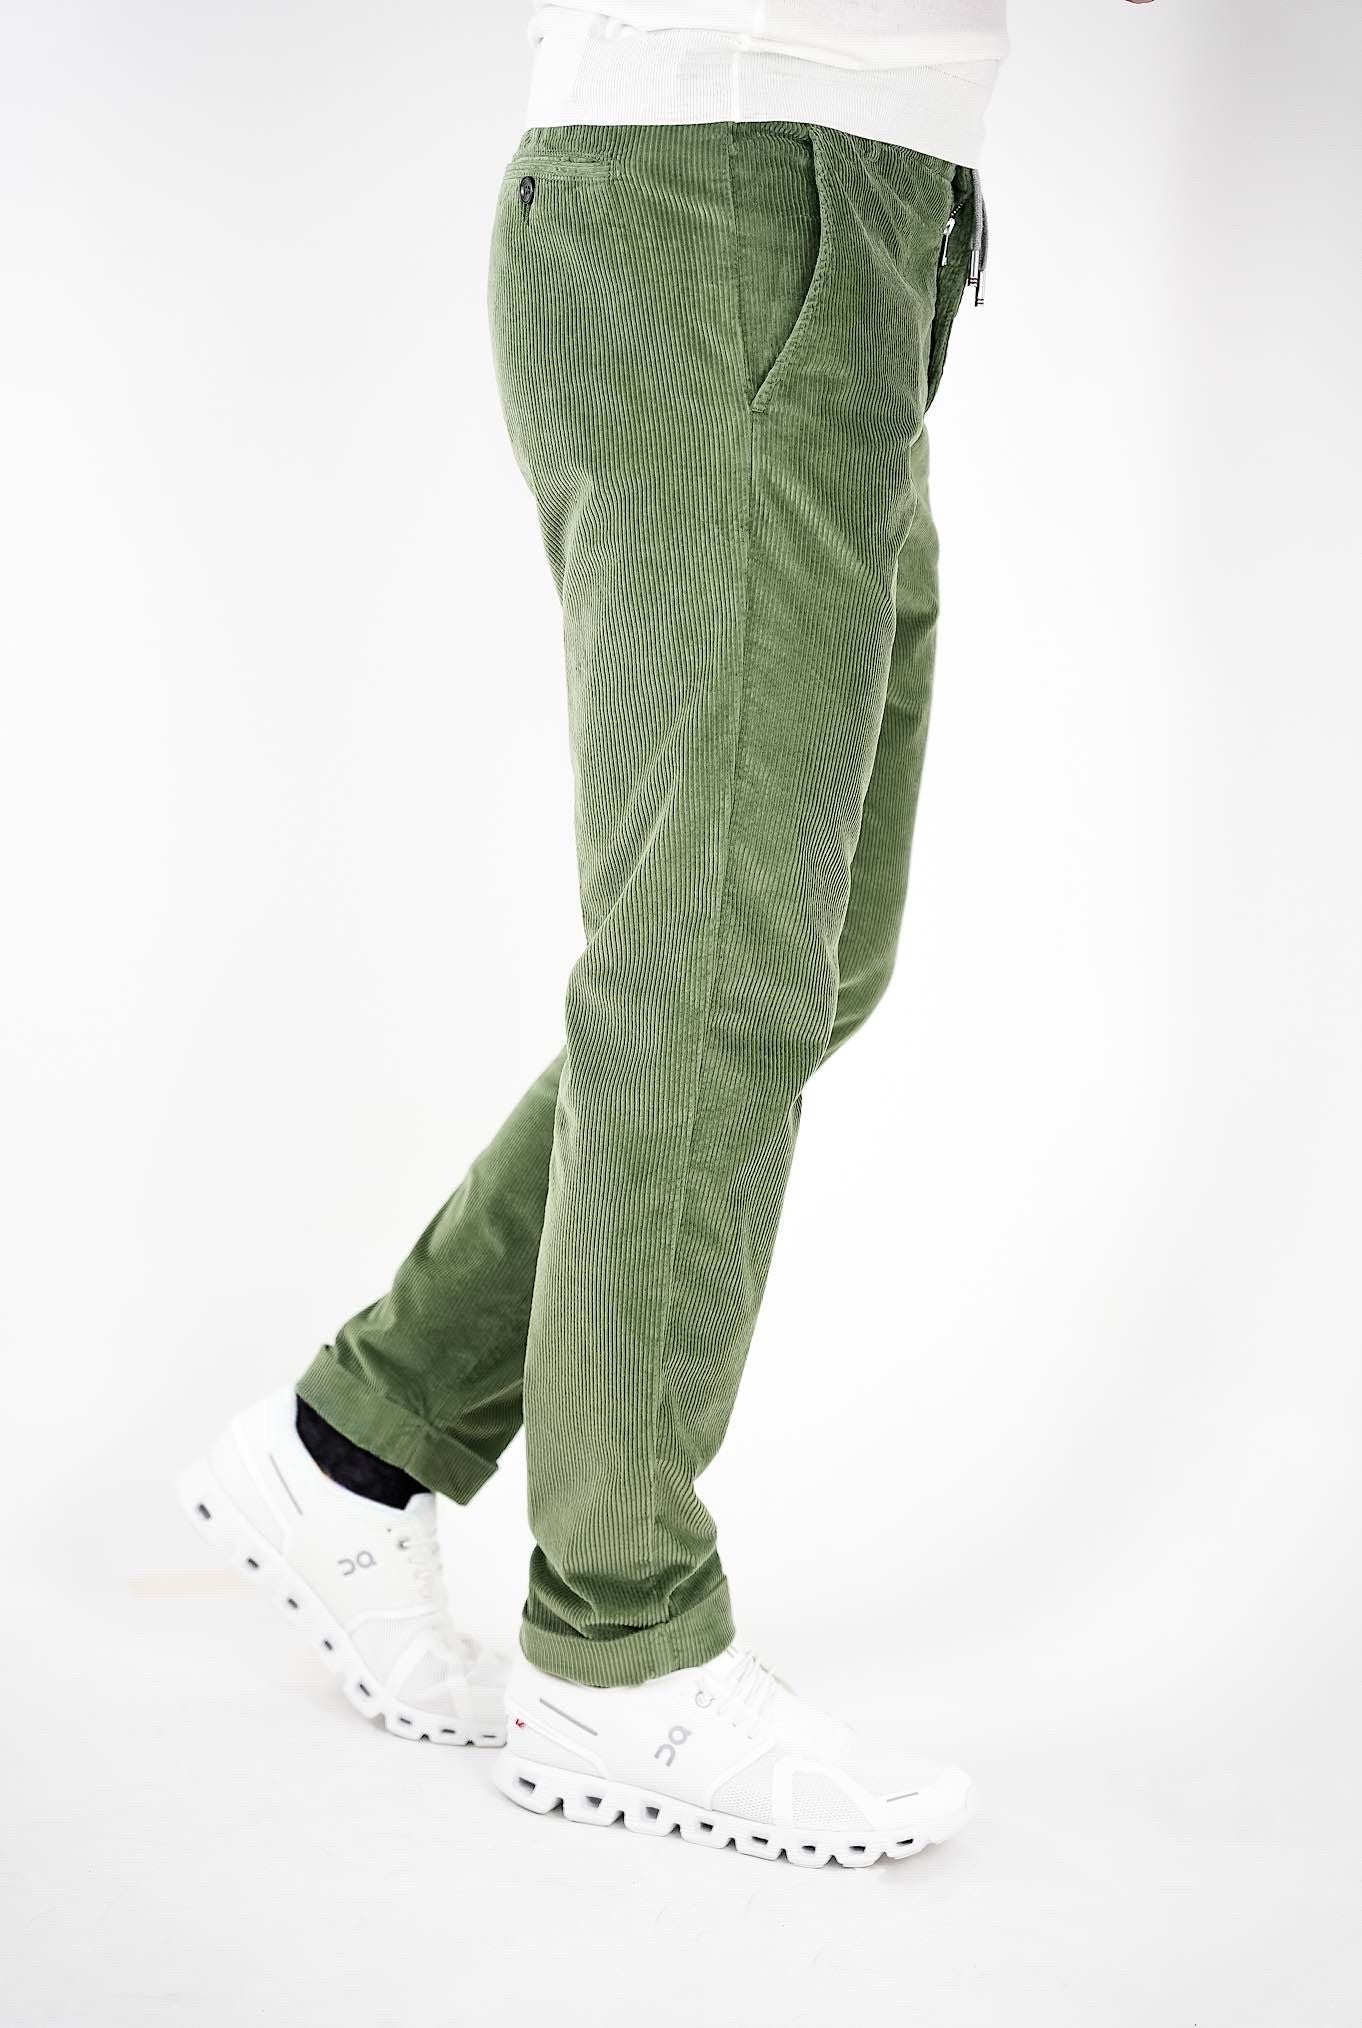 MARCO PESCAROLO Velvet Trousers with Green Drawstring